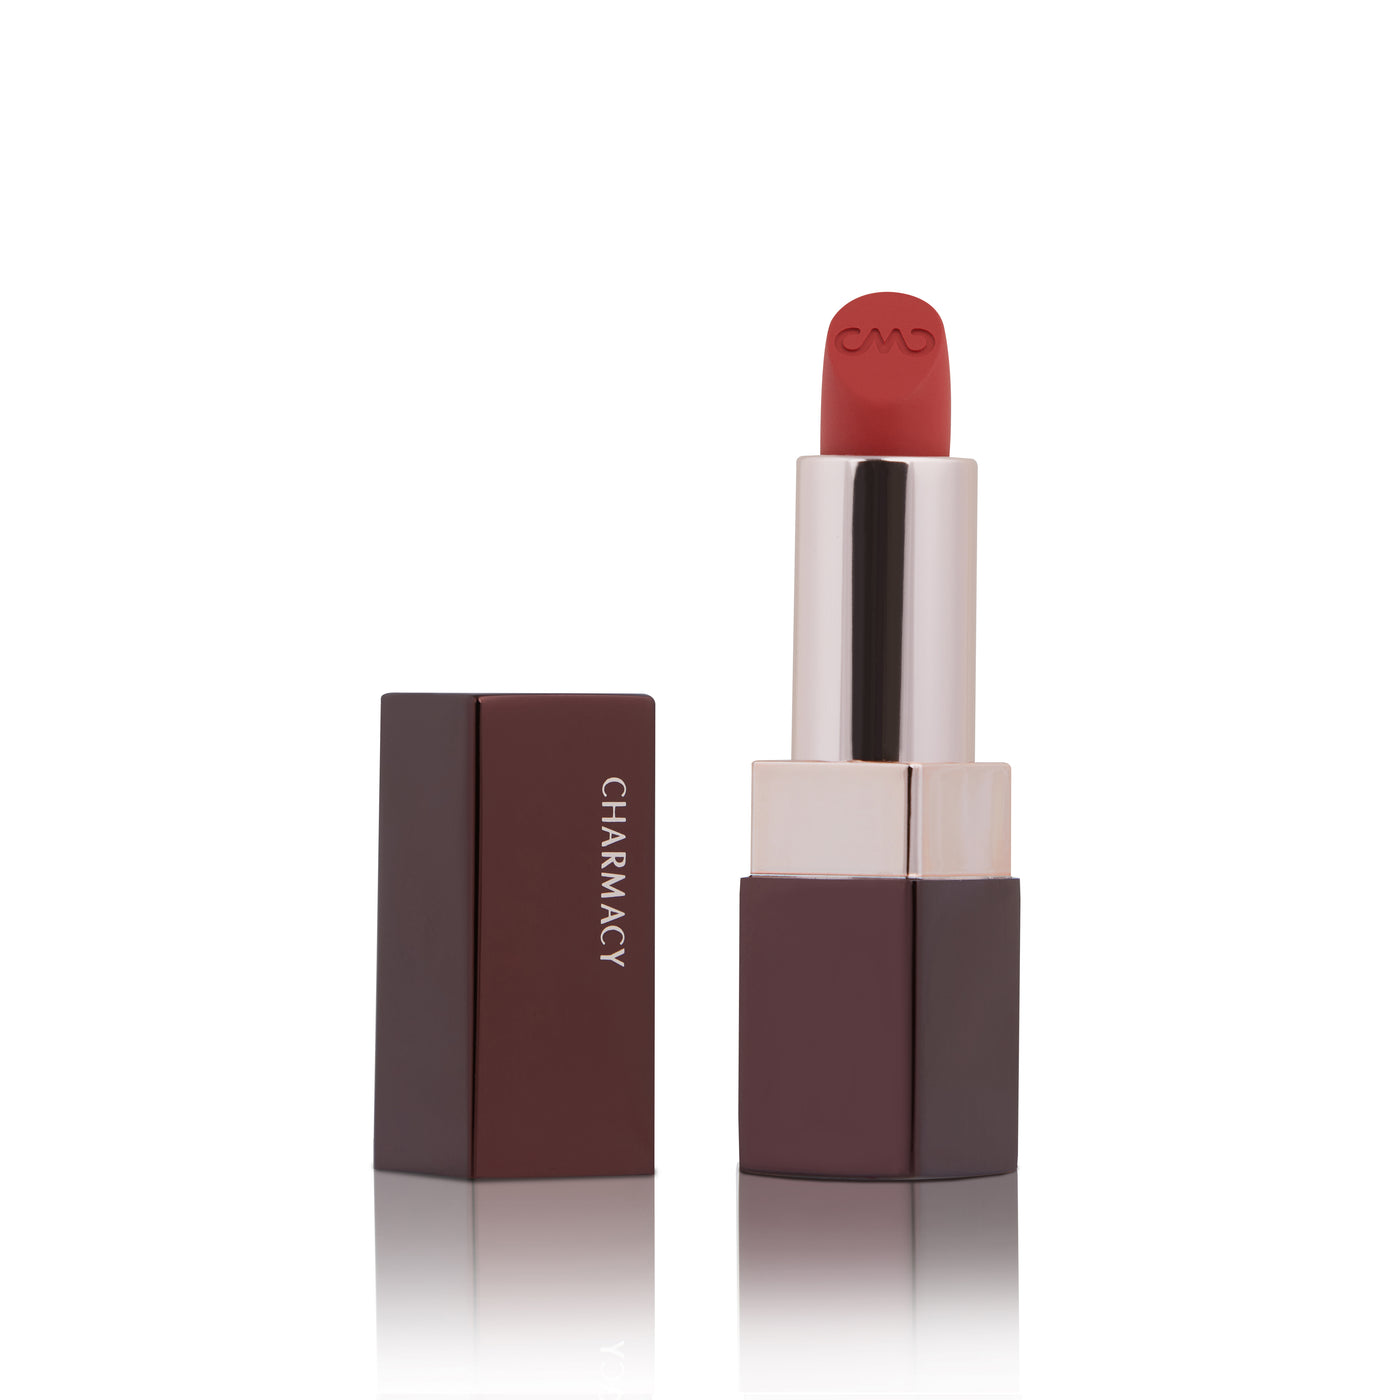 Charmacy Milano Lipstick for Soft Focus | Matte Lipstick